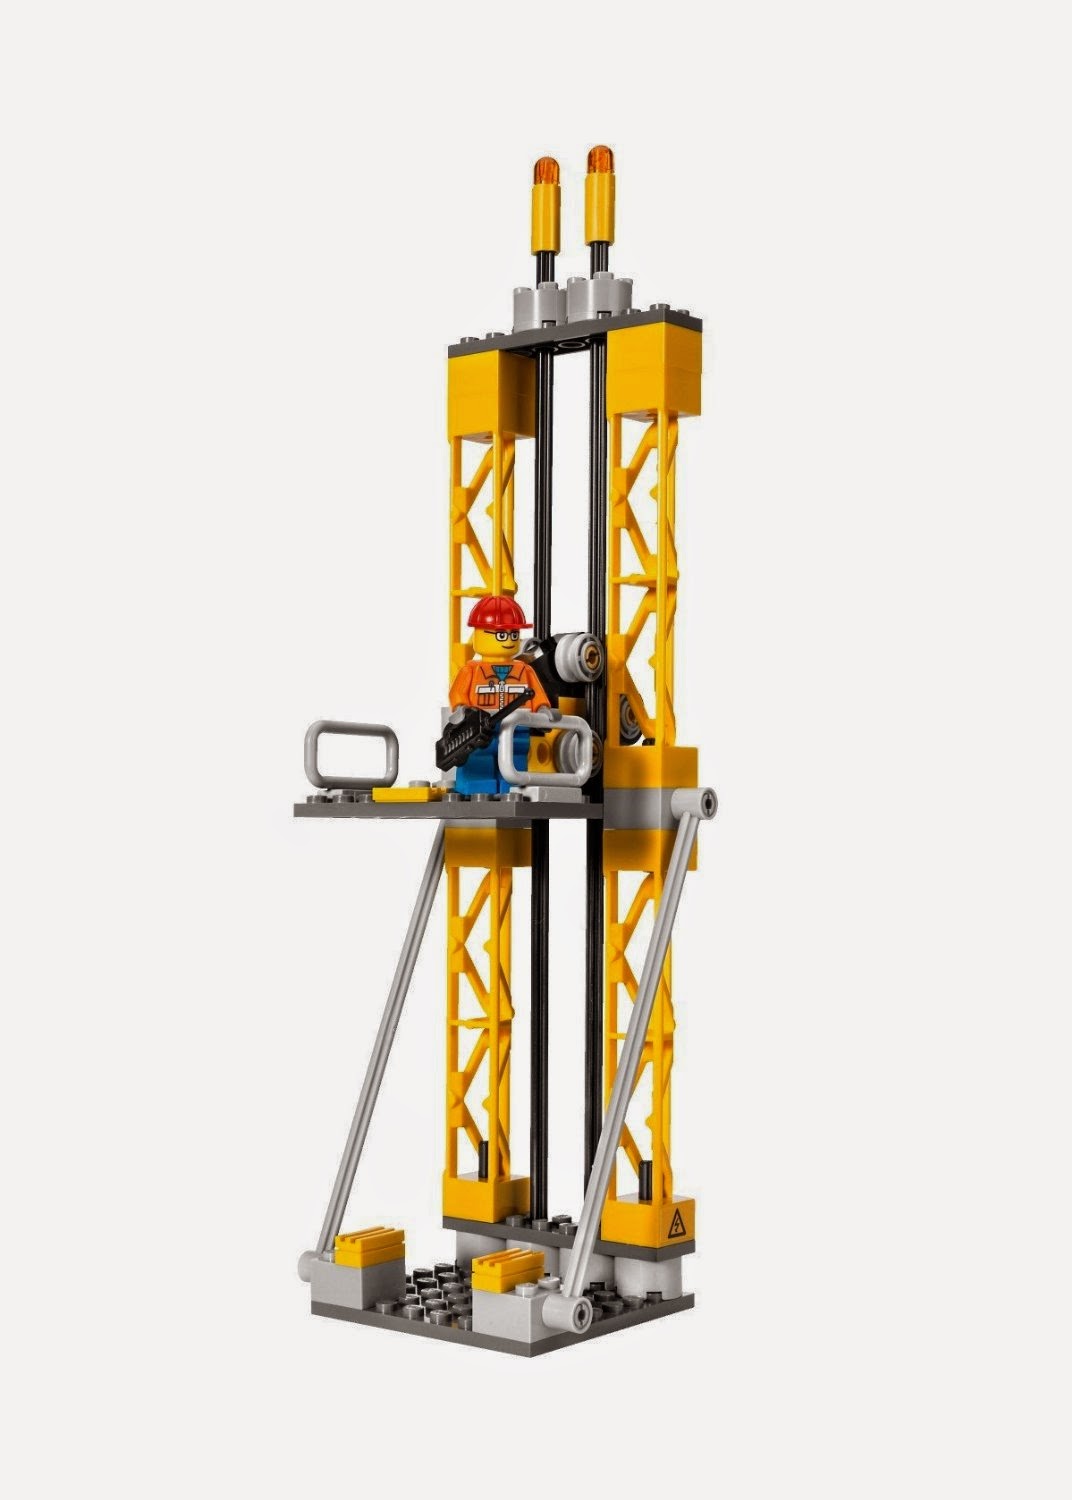 Lego City Construction Set